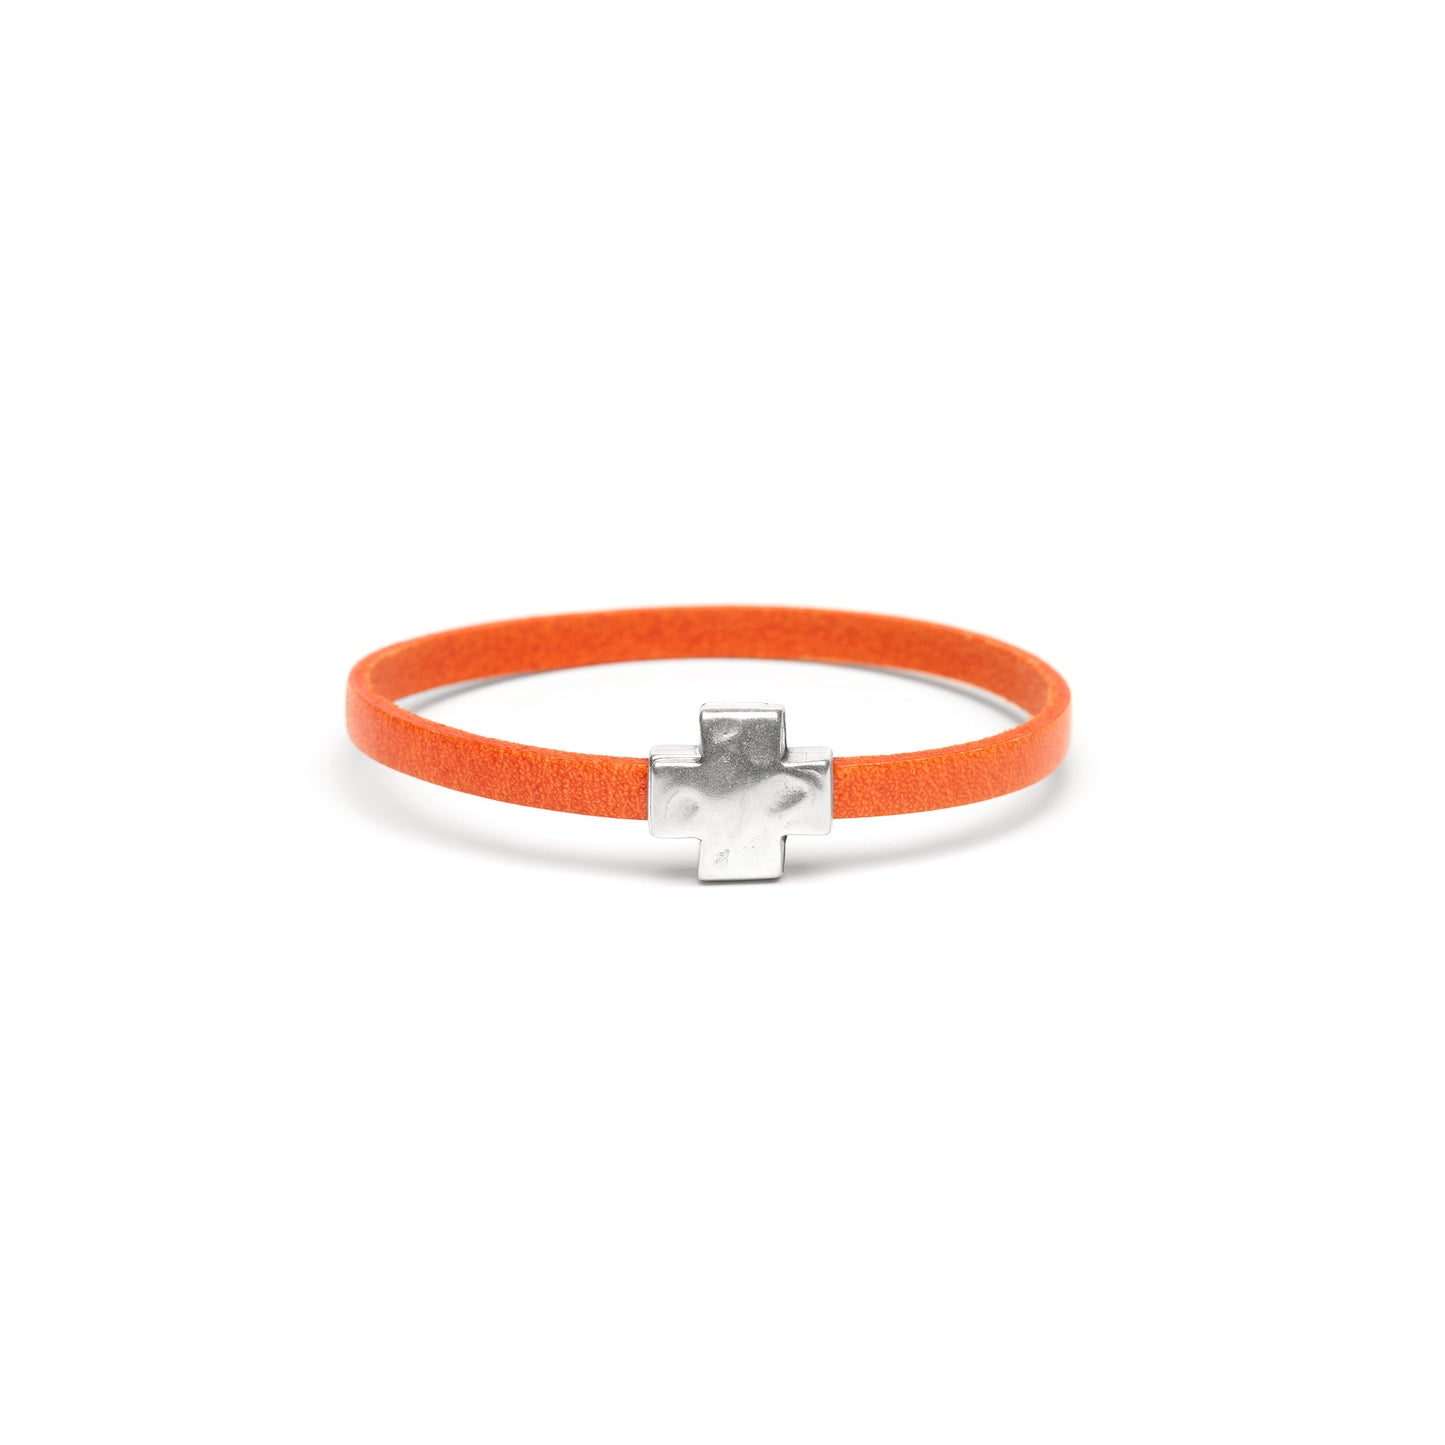 "Wrap it Up Bracelet" with Silver Cross - Single Length - Orange